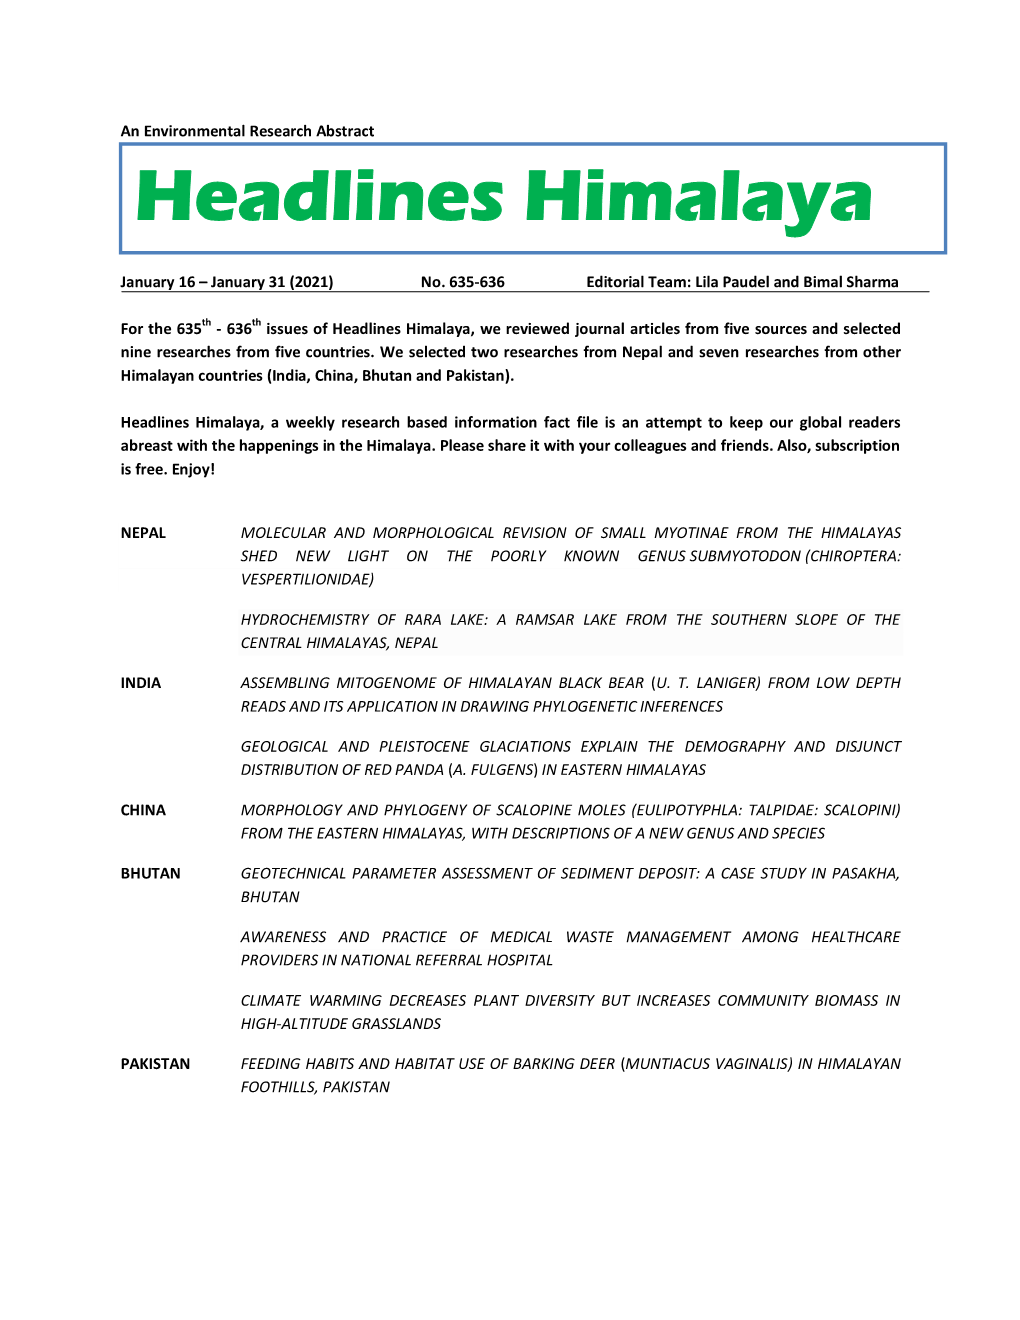 Headlines Himalaya December